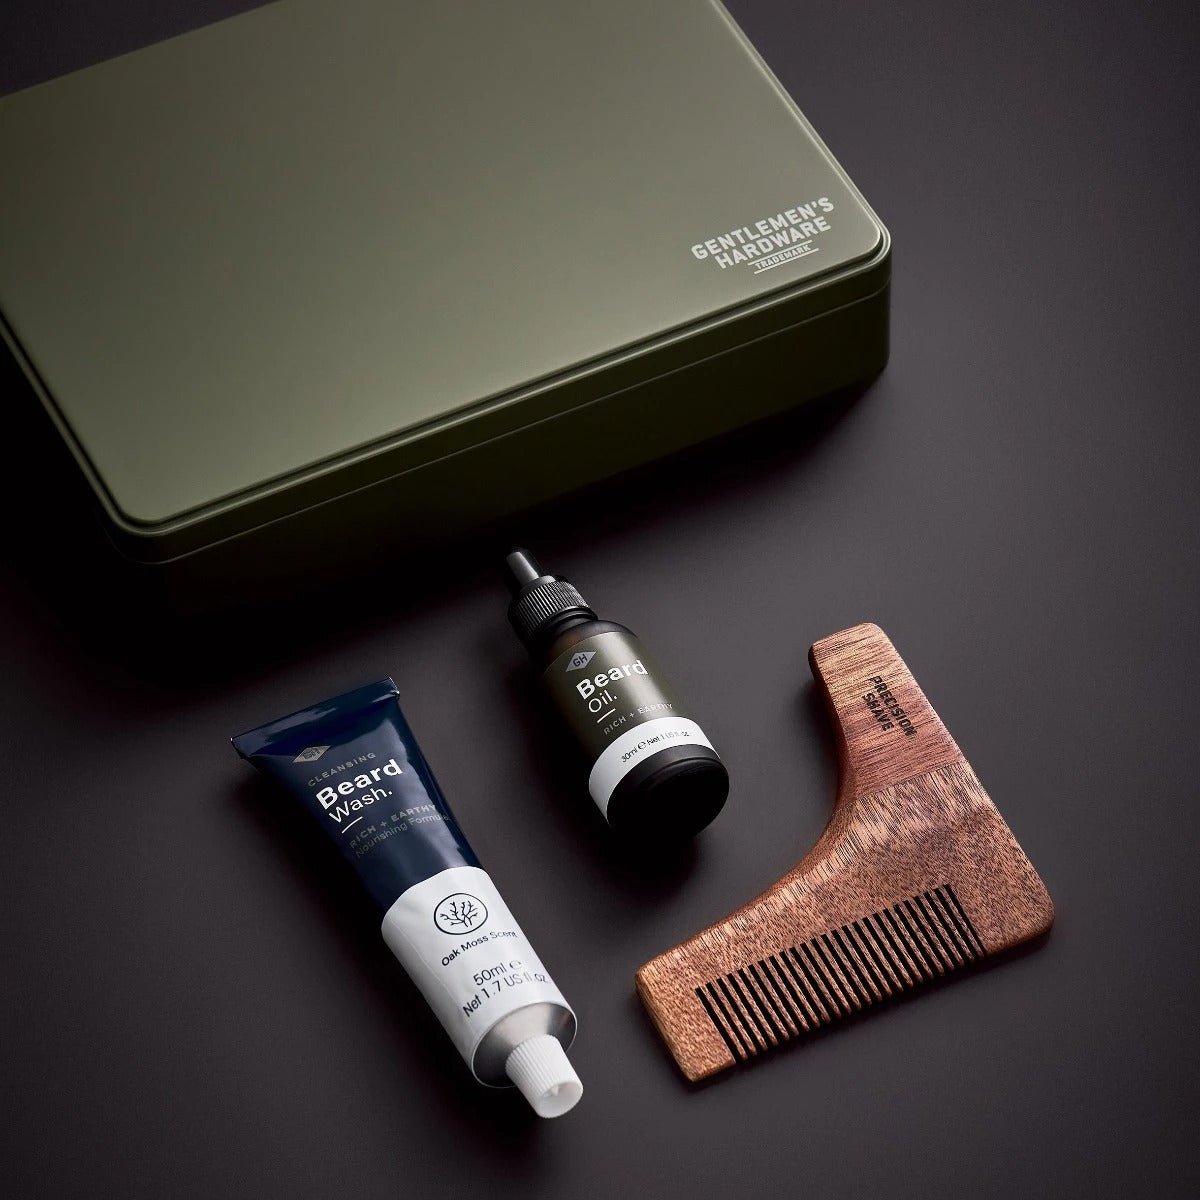 Gentlemen's HardwareGentlemen's Hardware Beard Survival Kit #same day gift delivery melbourne#